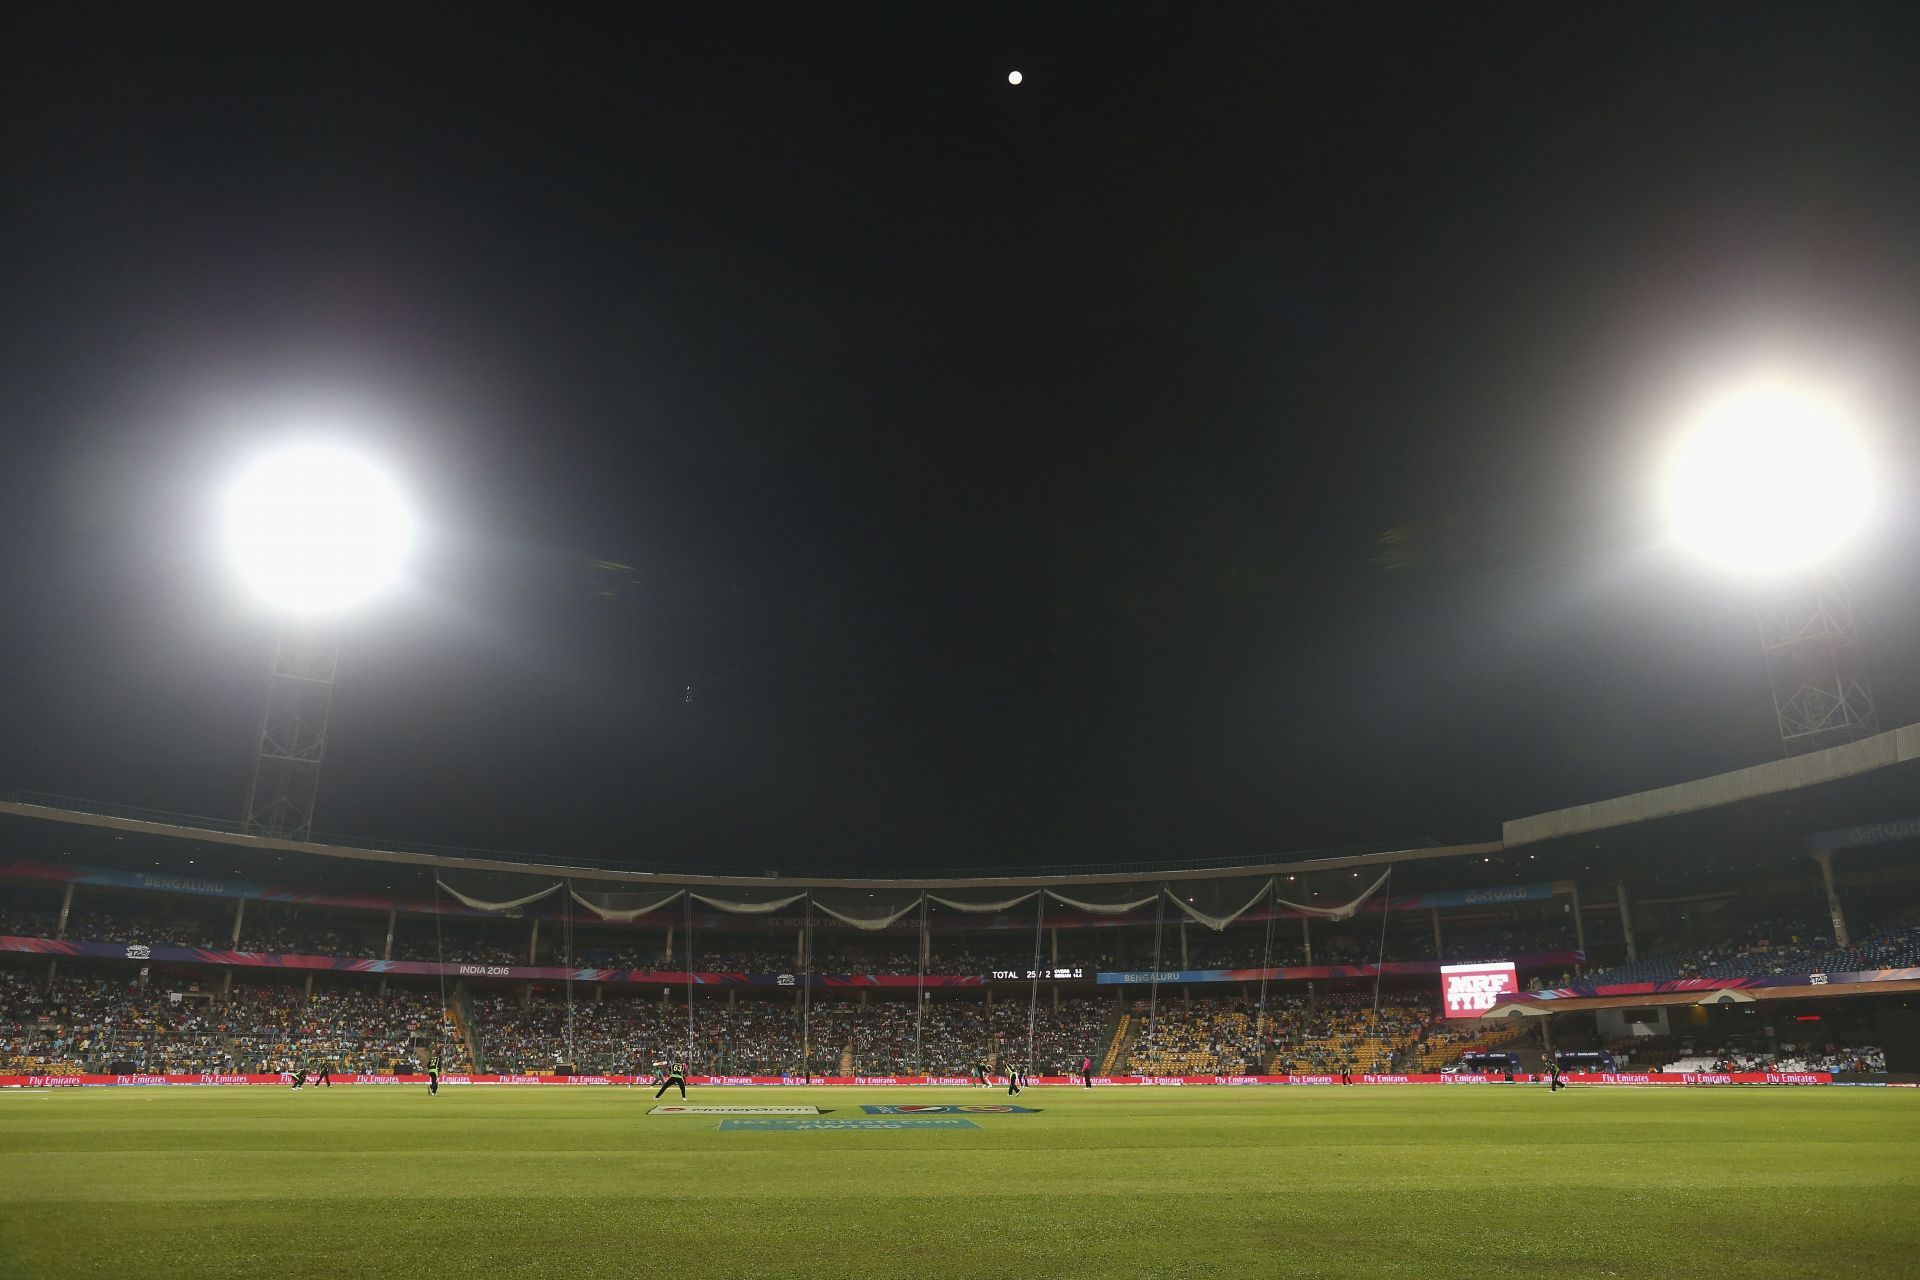 India and Sri Lanka will play the second Test at the M Chinnaswamy Stadium in Bengaluru